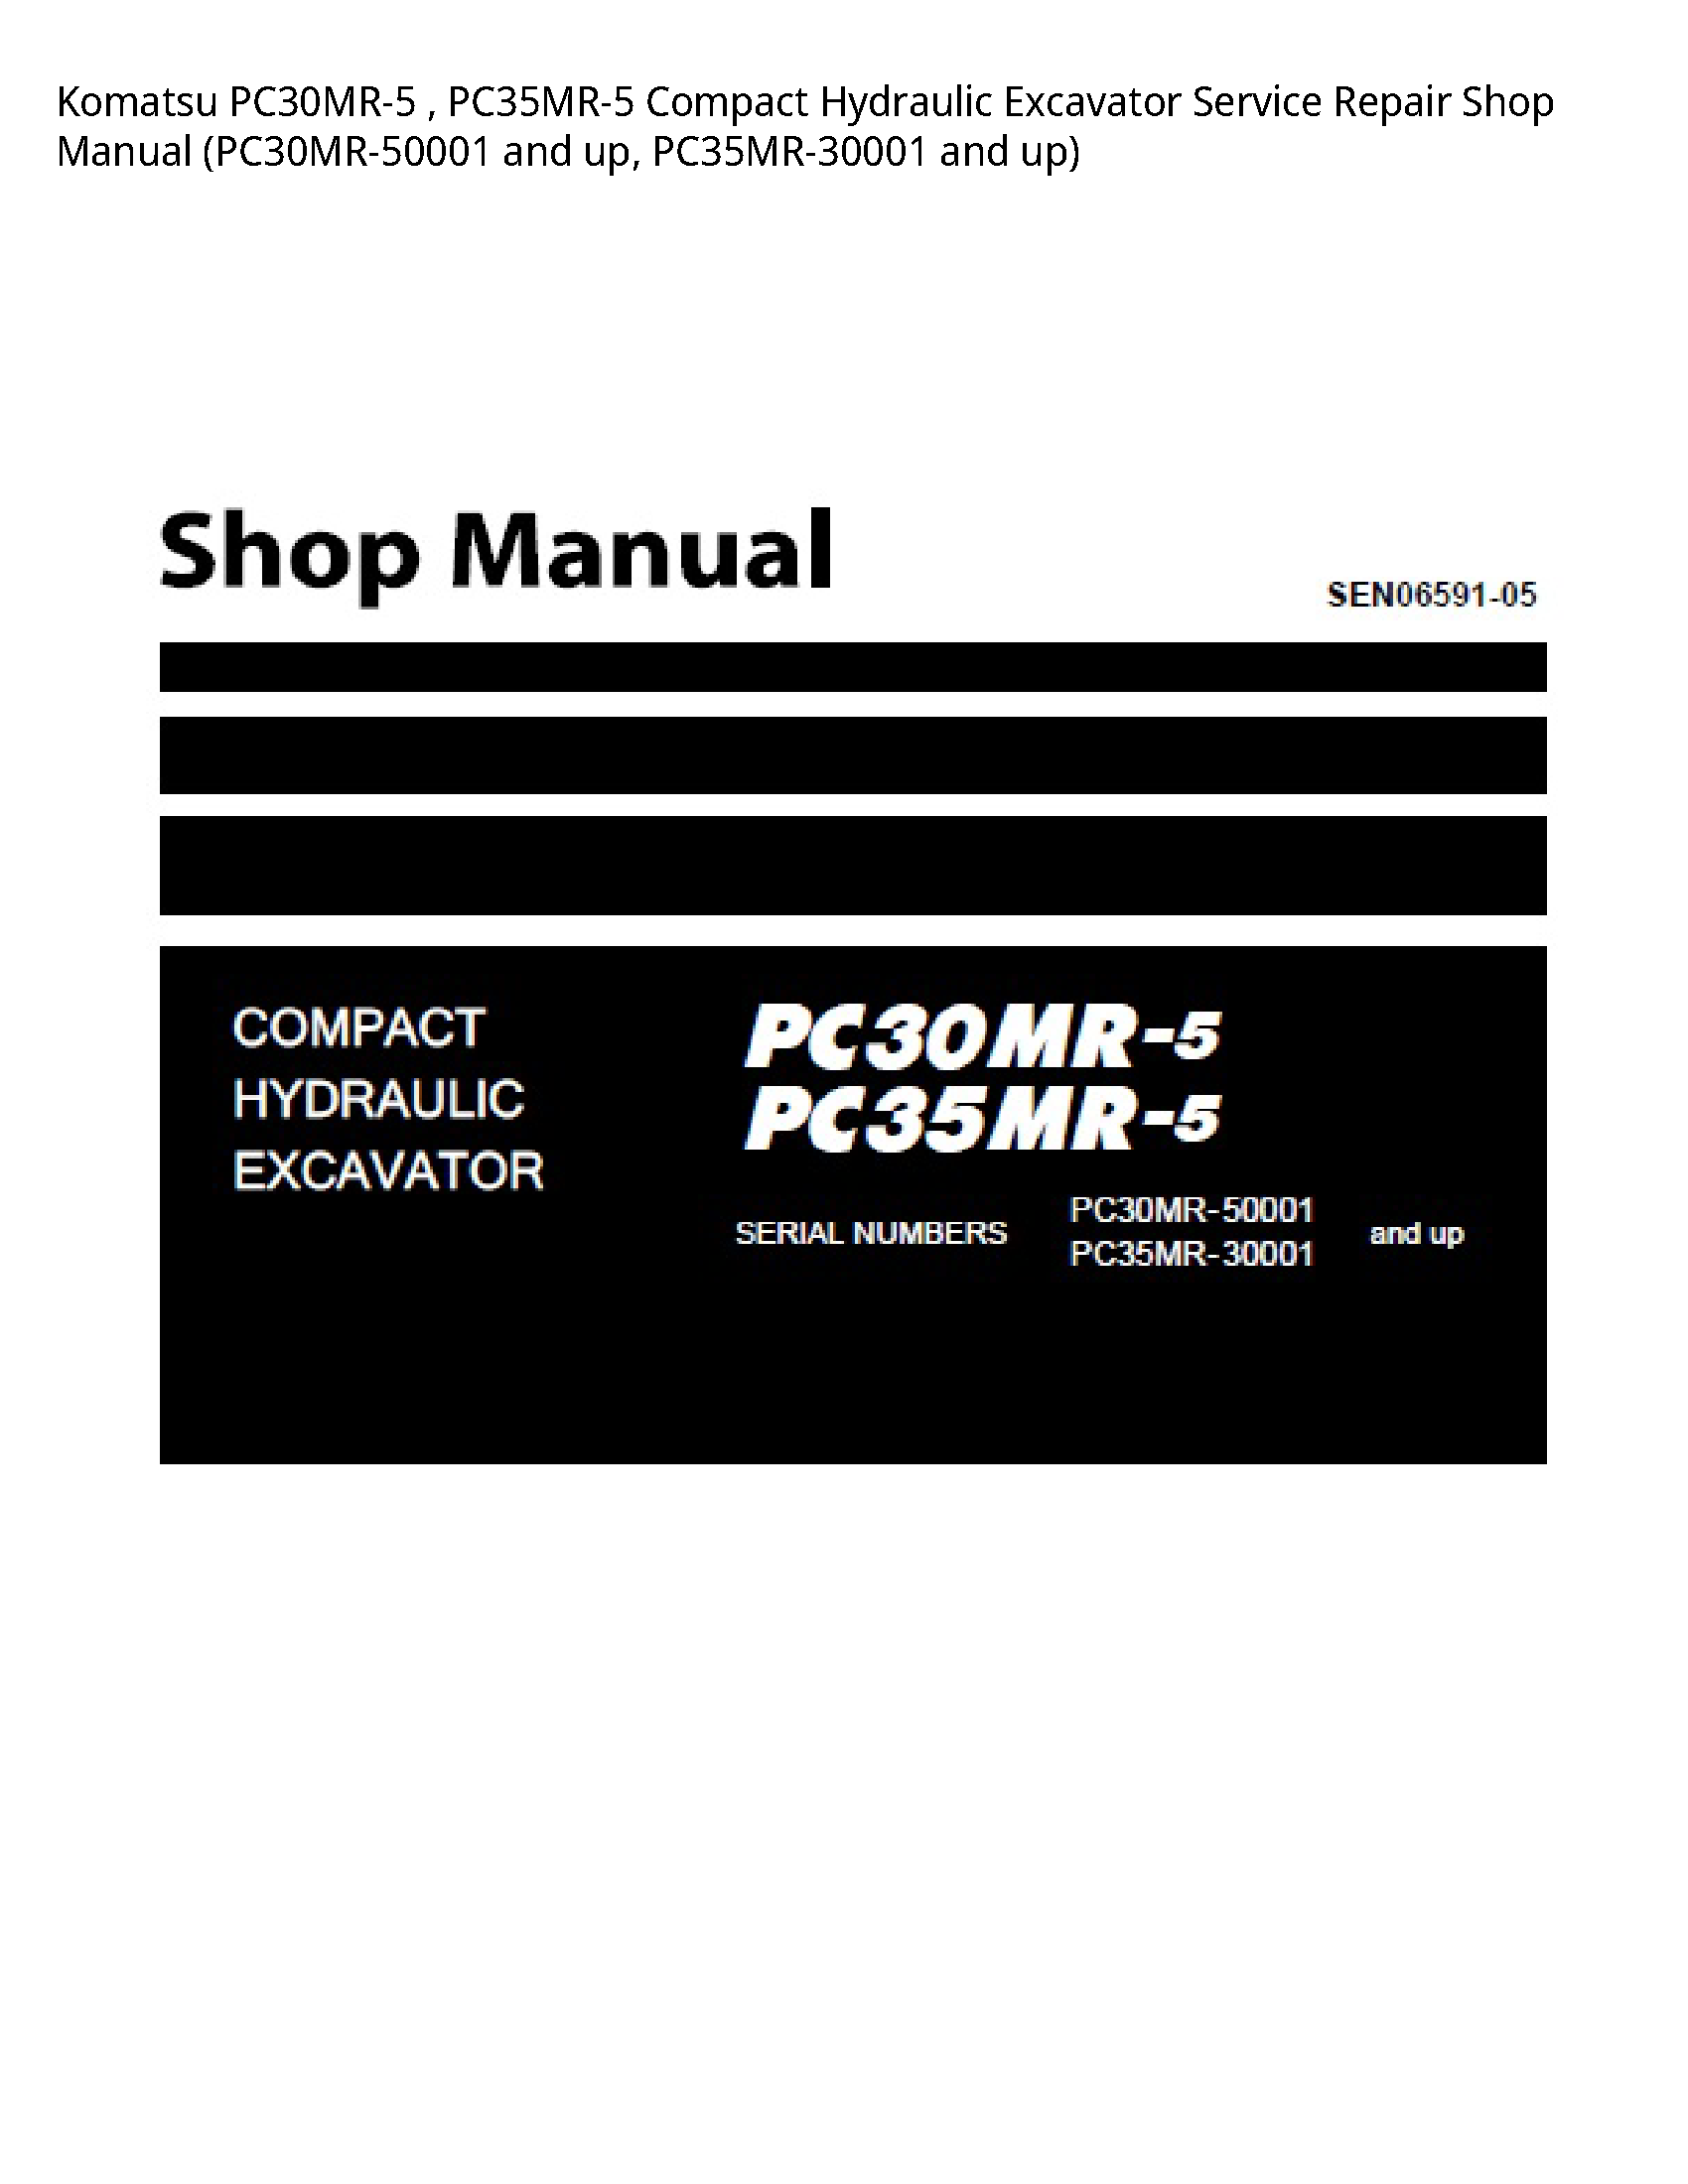 KOMATSU PC30MR-5 Compact Hydraulic Excavator manual